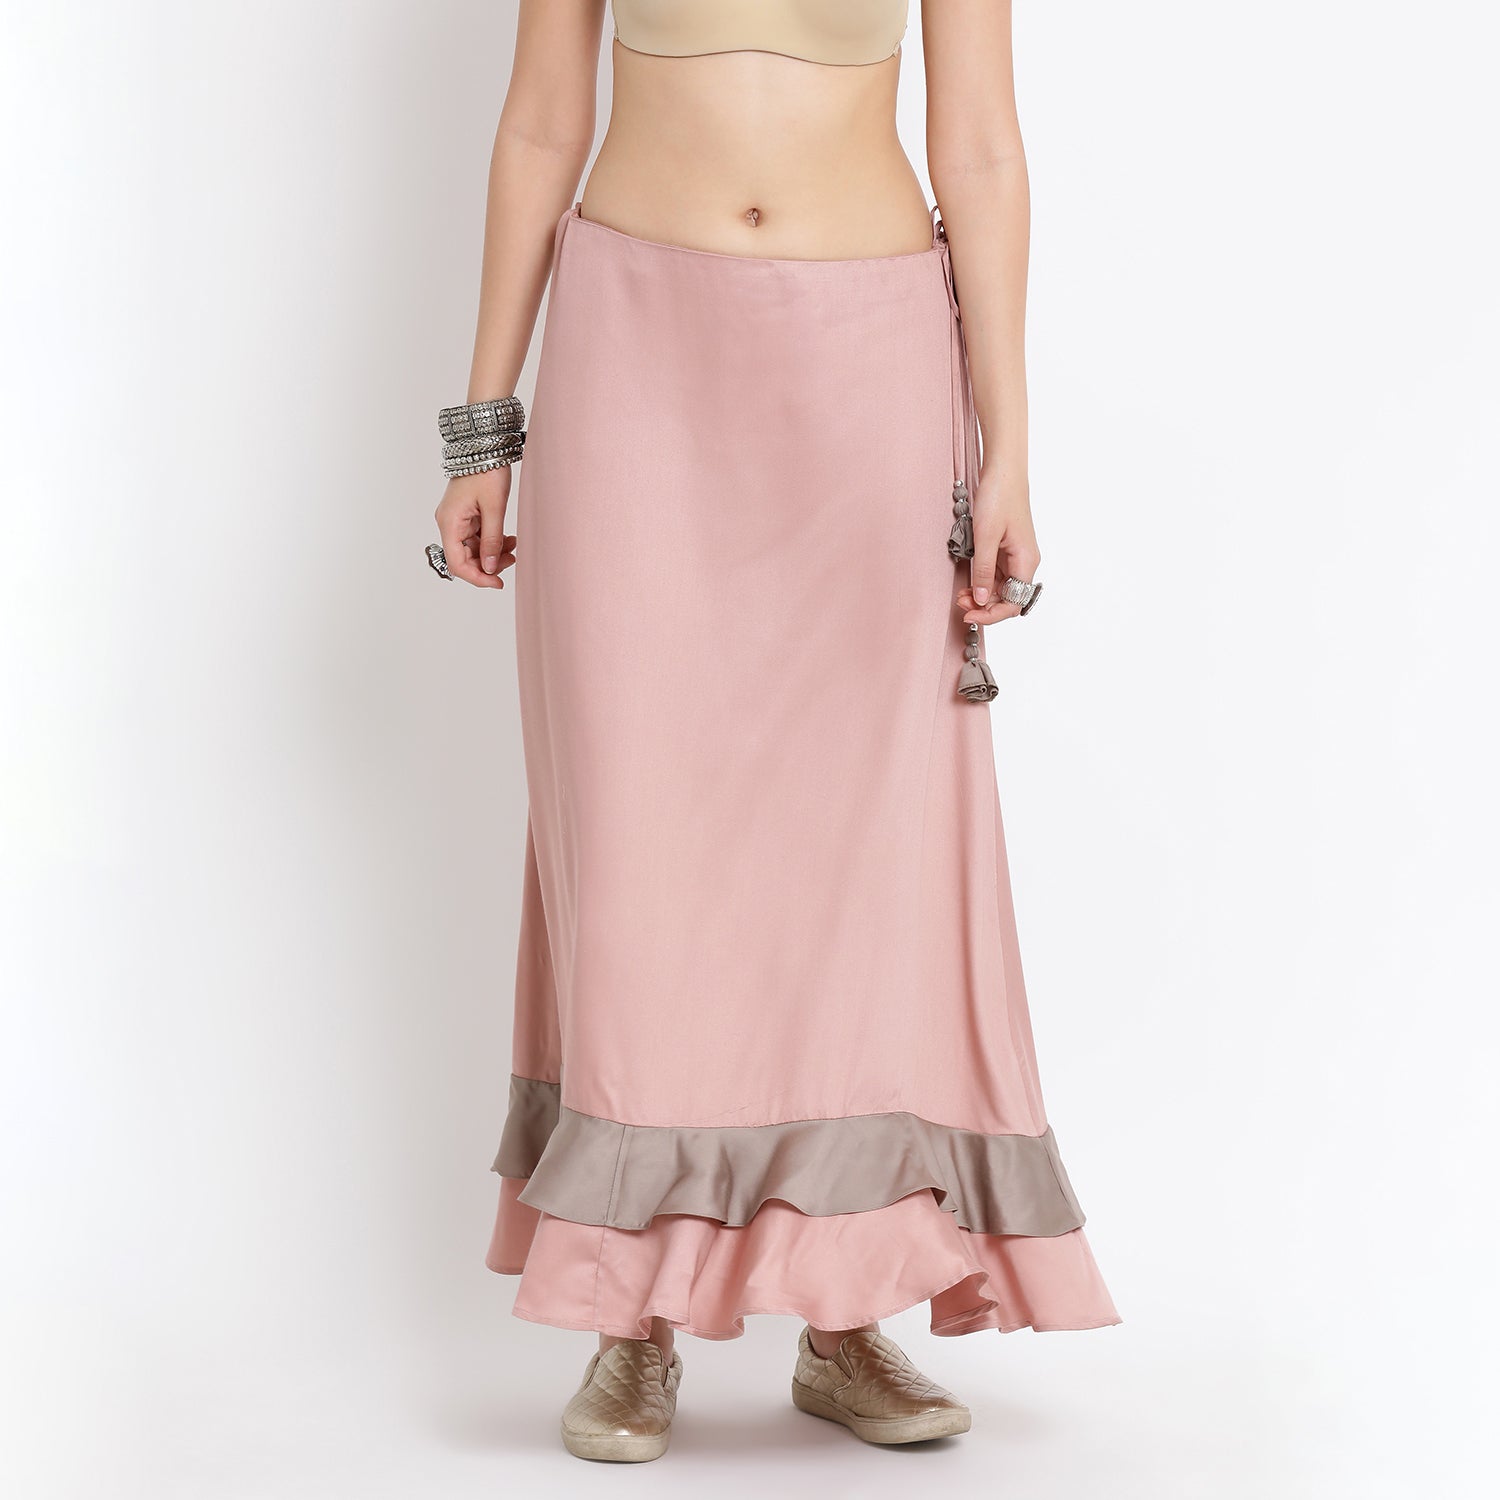 Pink long skirt with grey frill at bottom